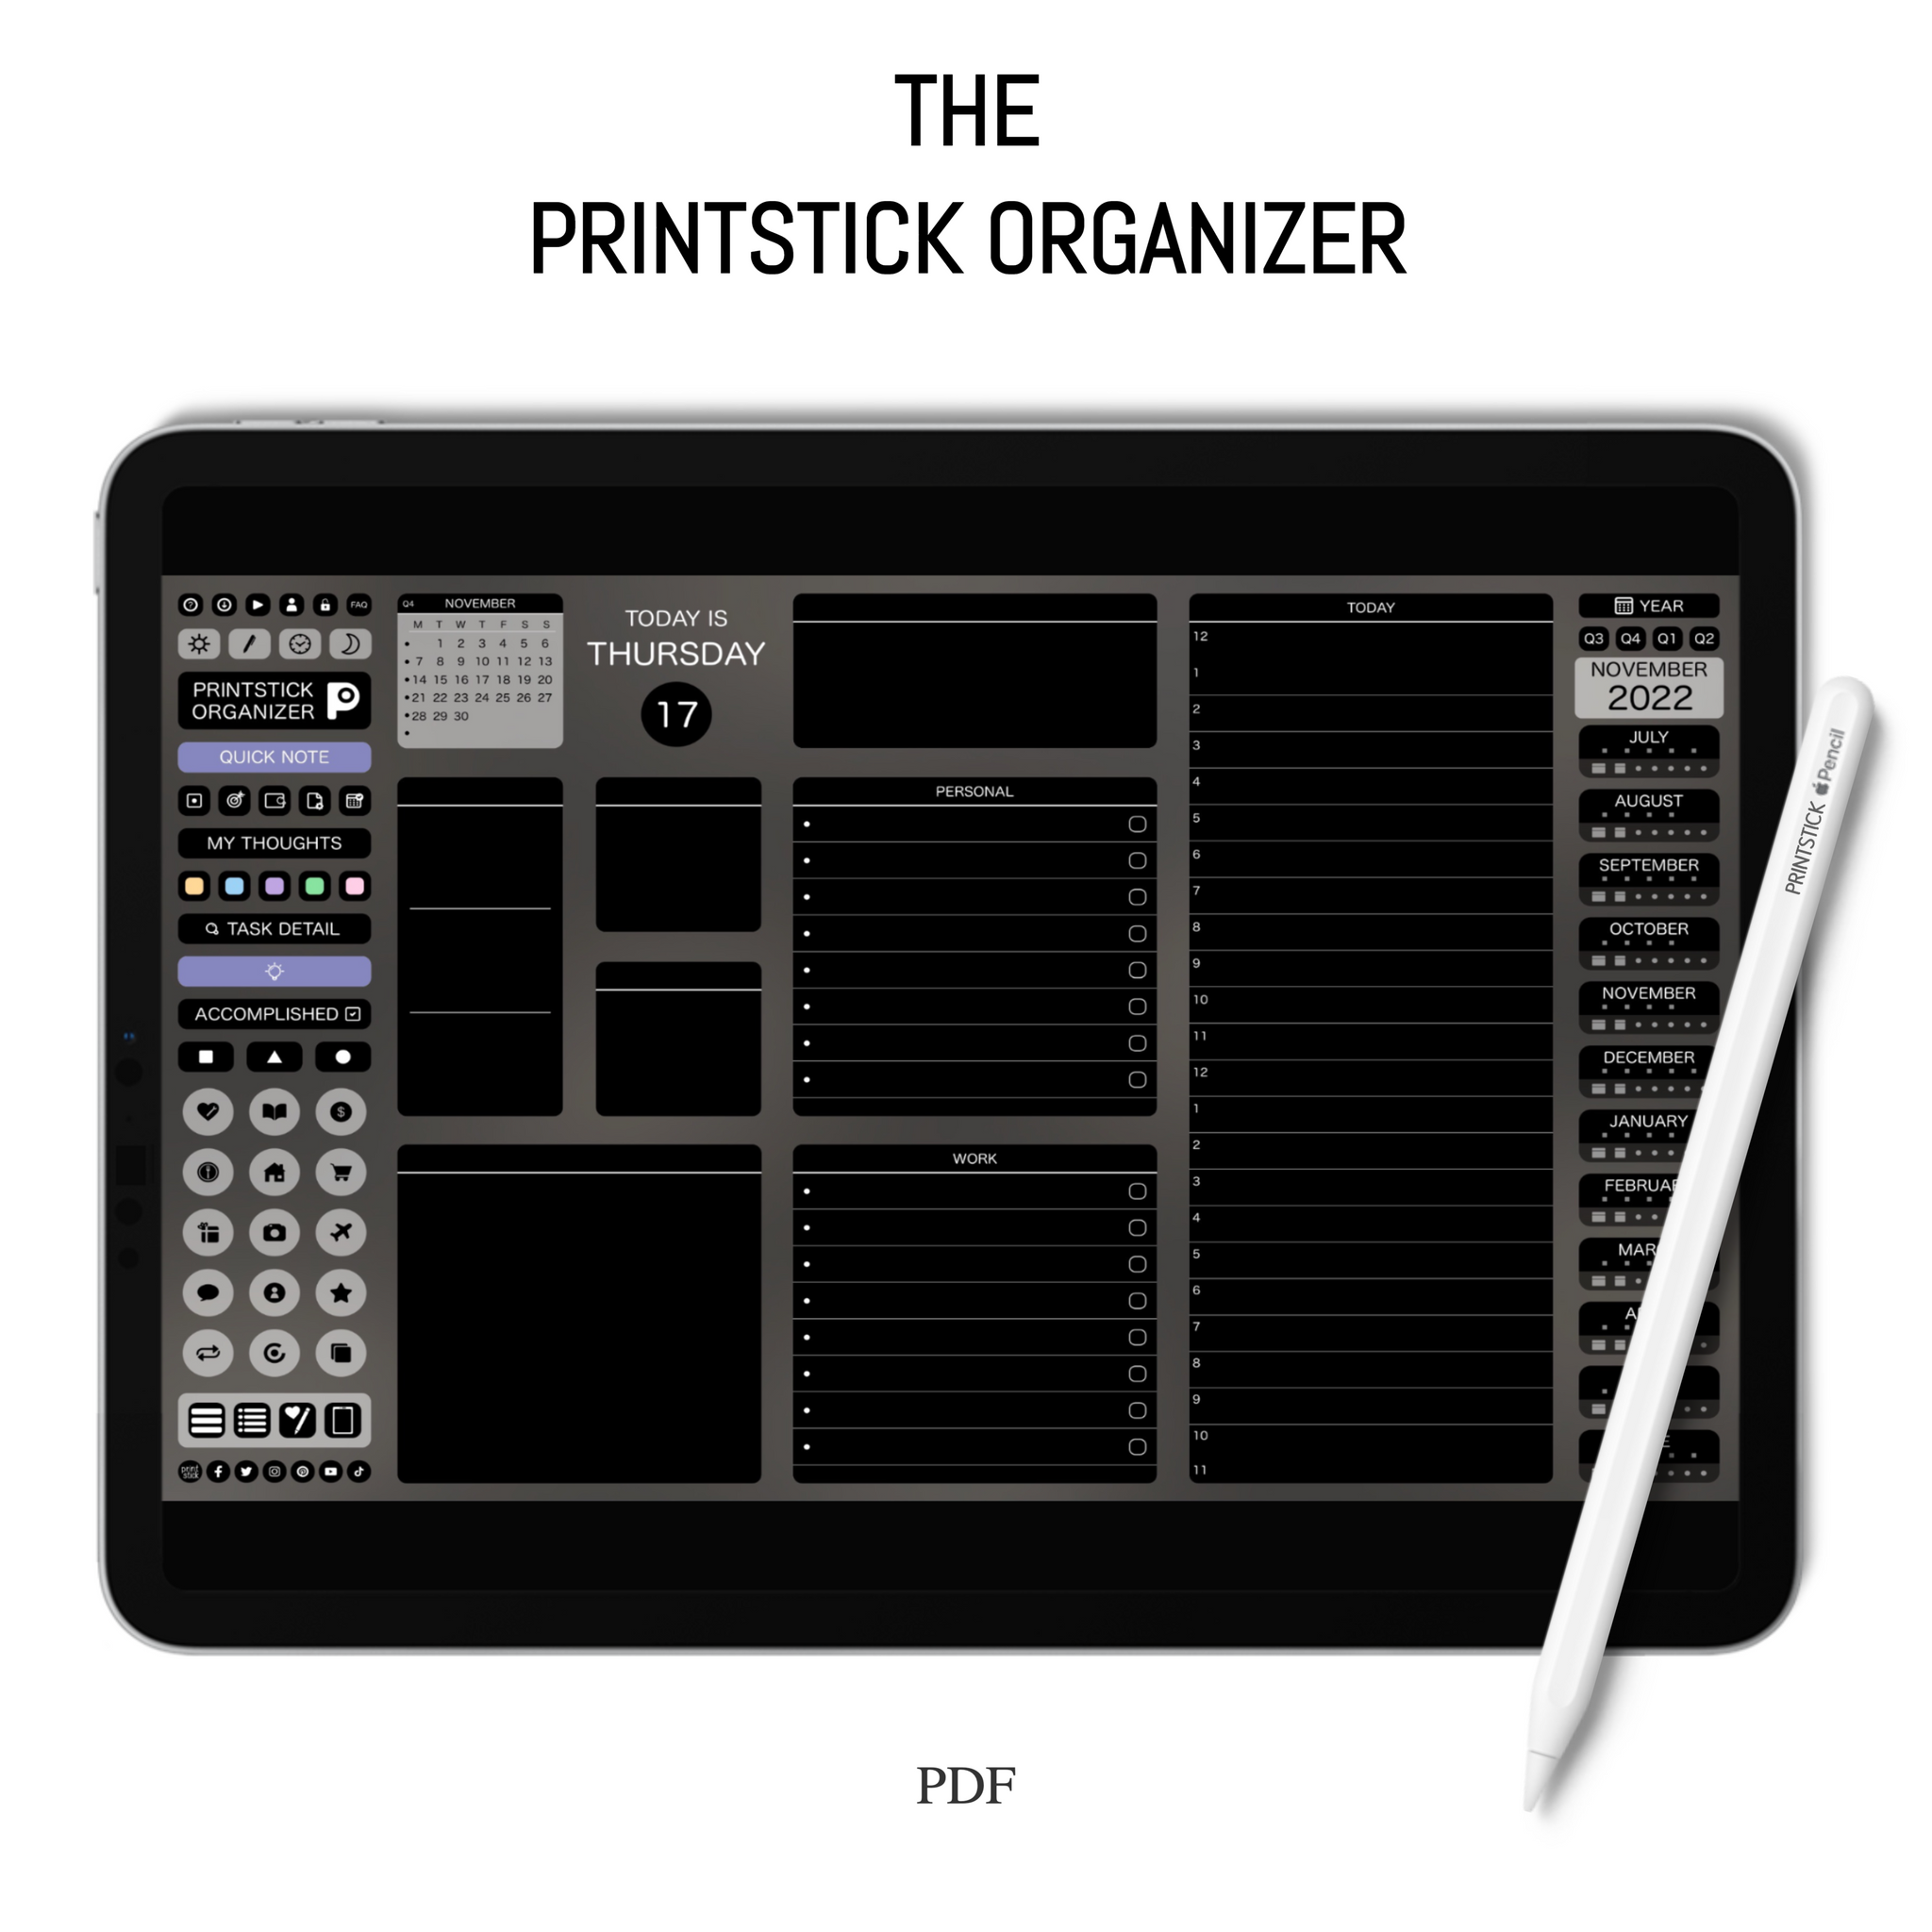 PrintStick Organizer - PrintStick